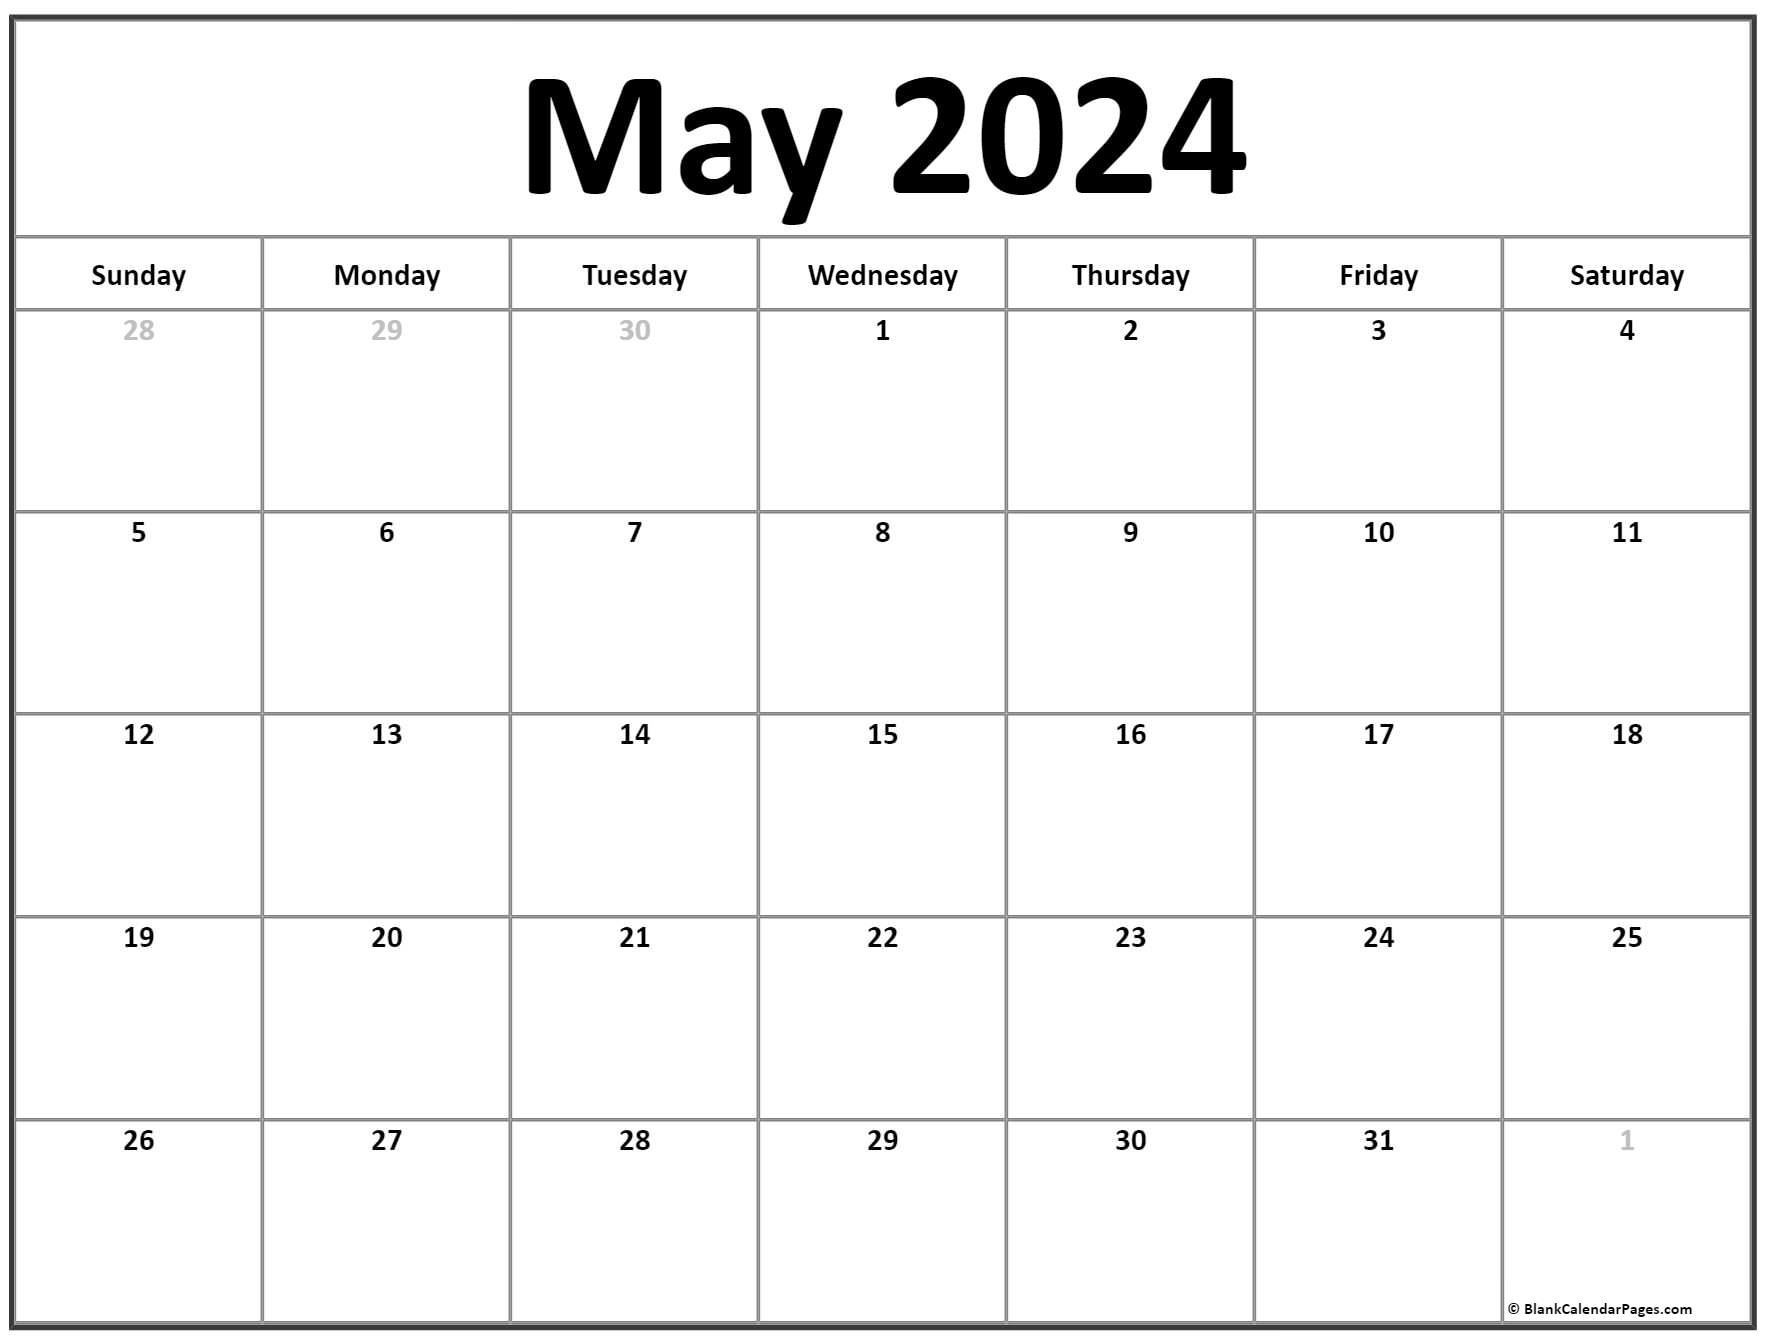 may-2023-calendar-free-printable-calendar